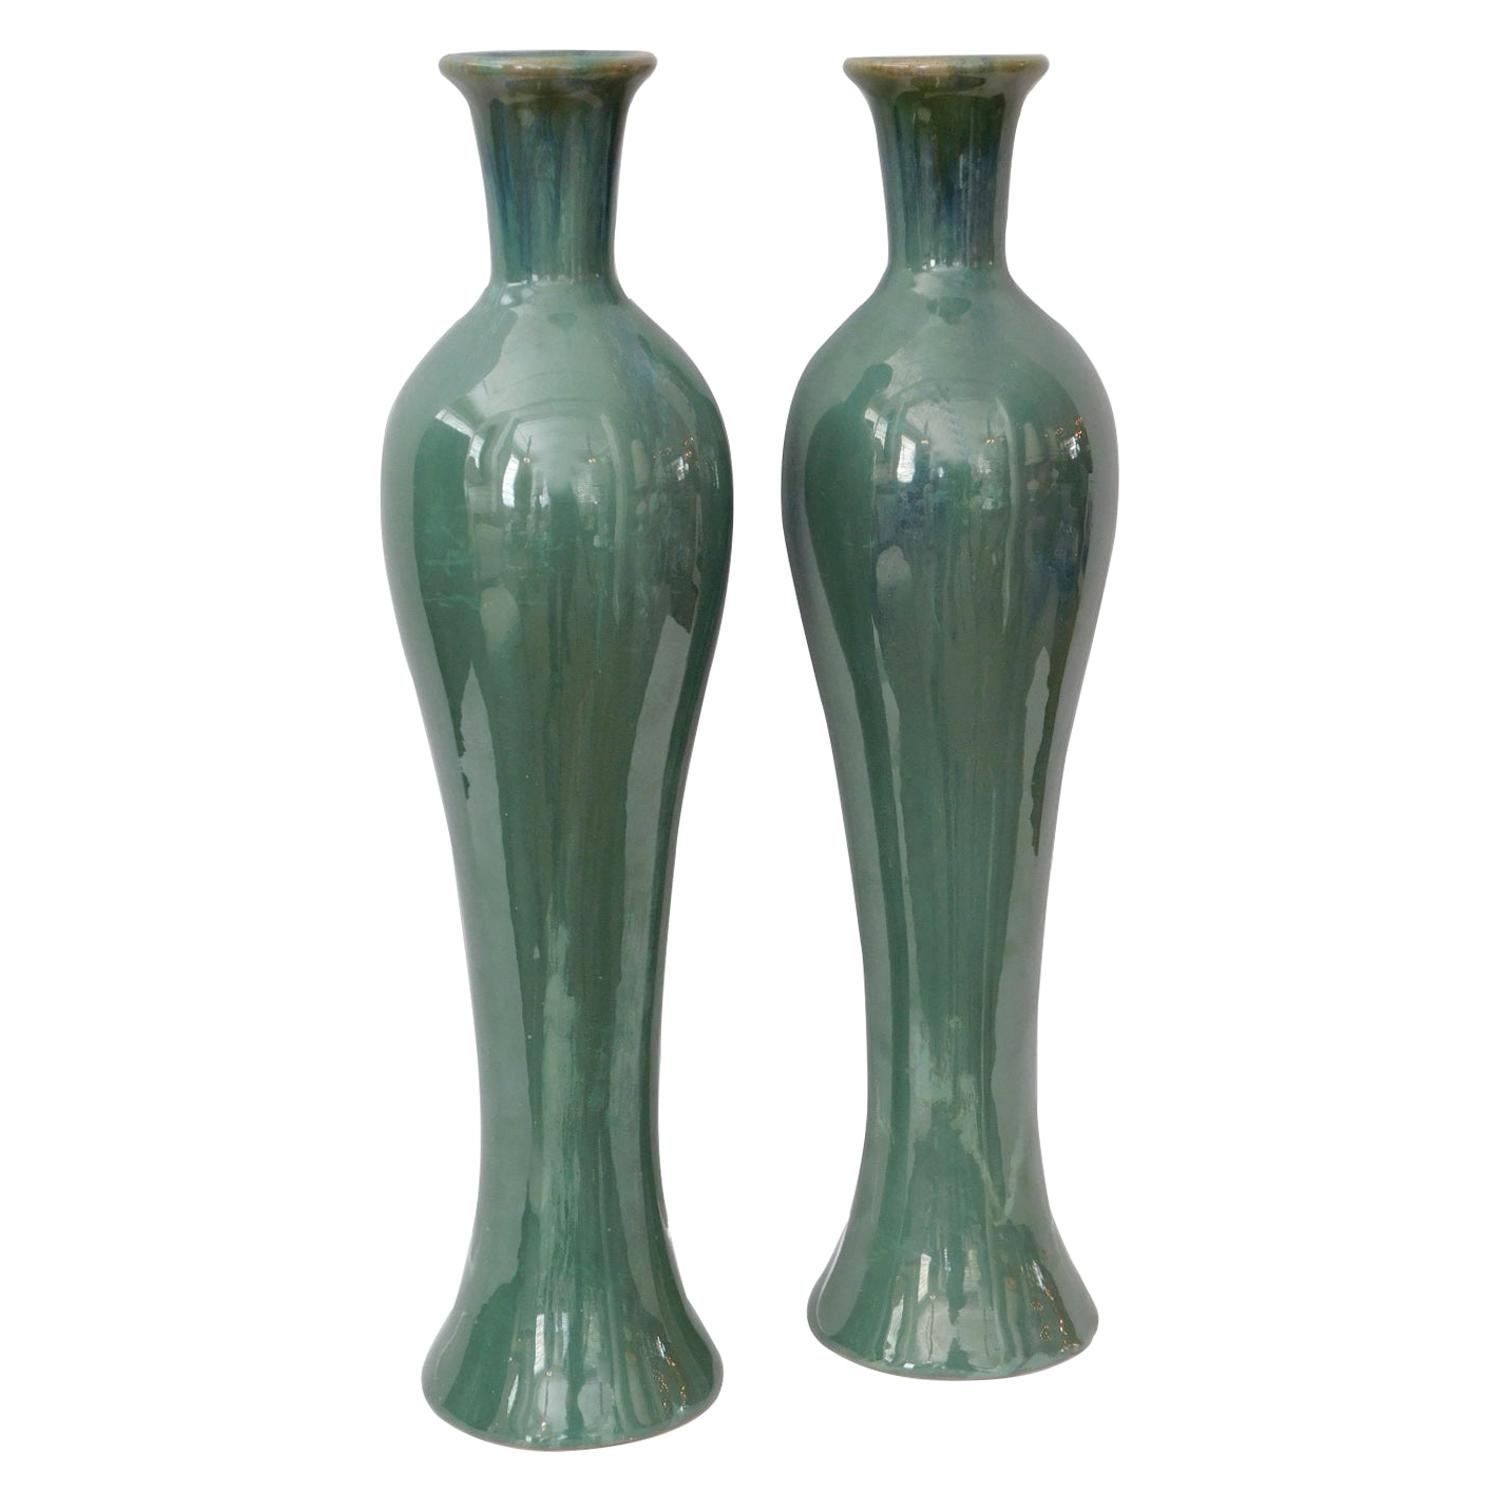 Pair of Japanese Hokkaido Doki Baluster-from Celadon Glazed Vases